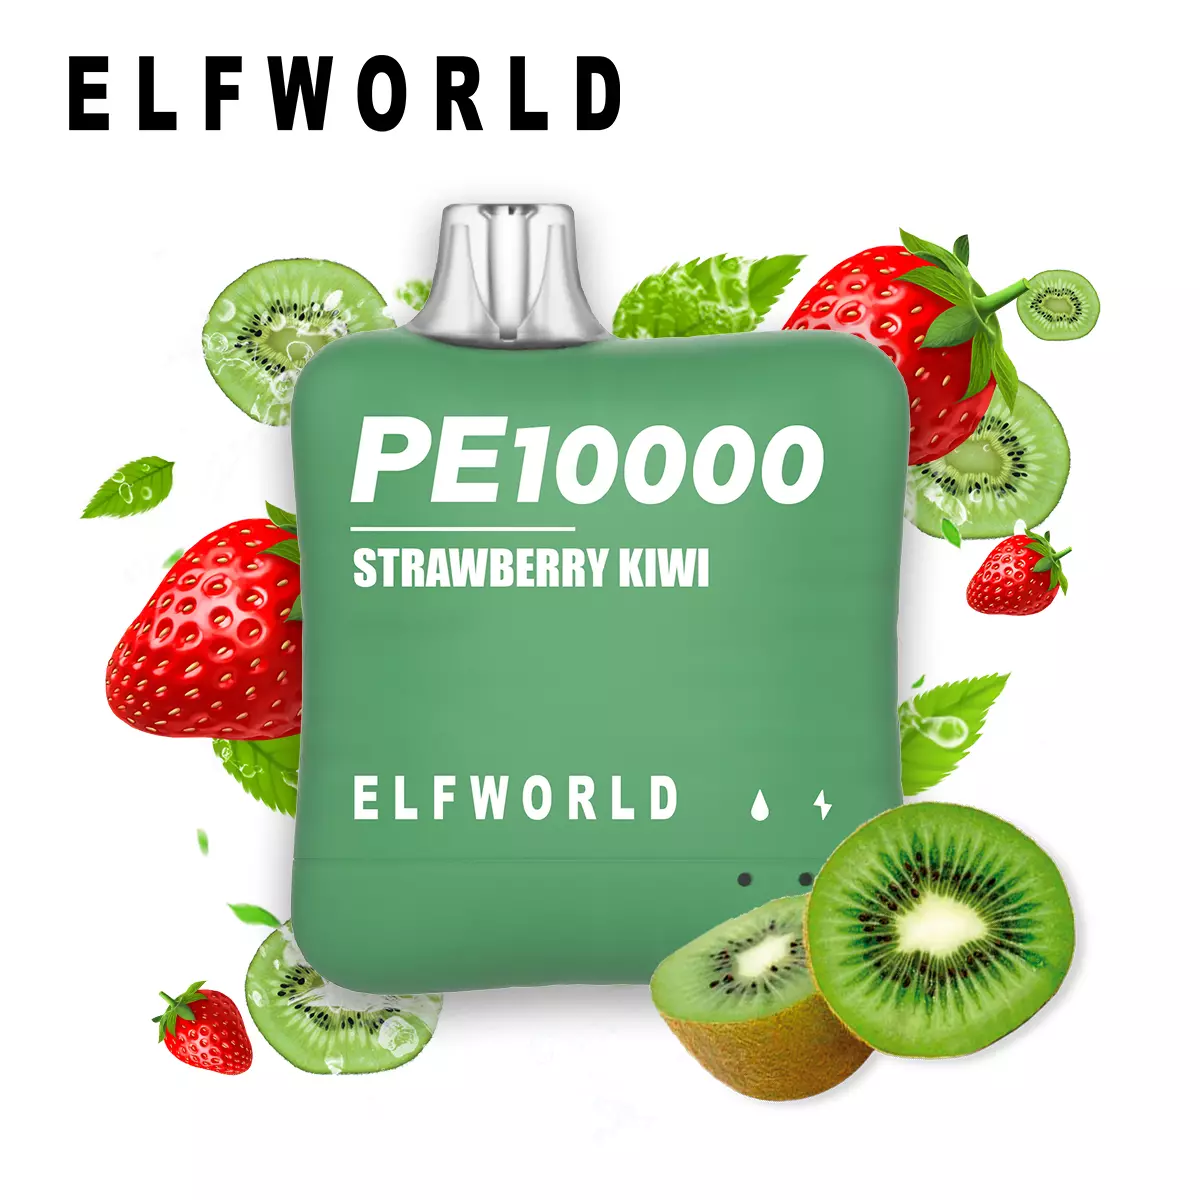 Strawberry Kiwi ELF WORLD PE 10000